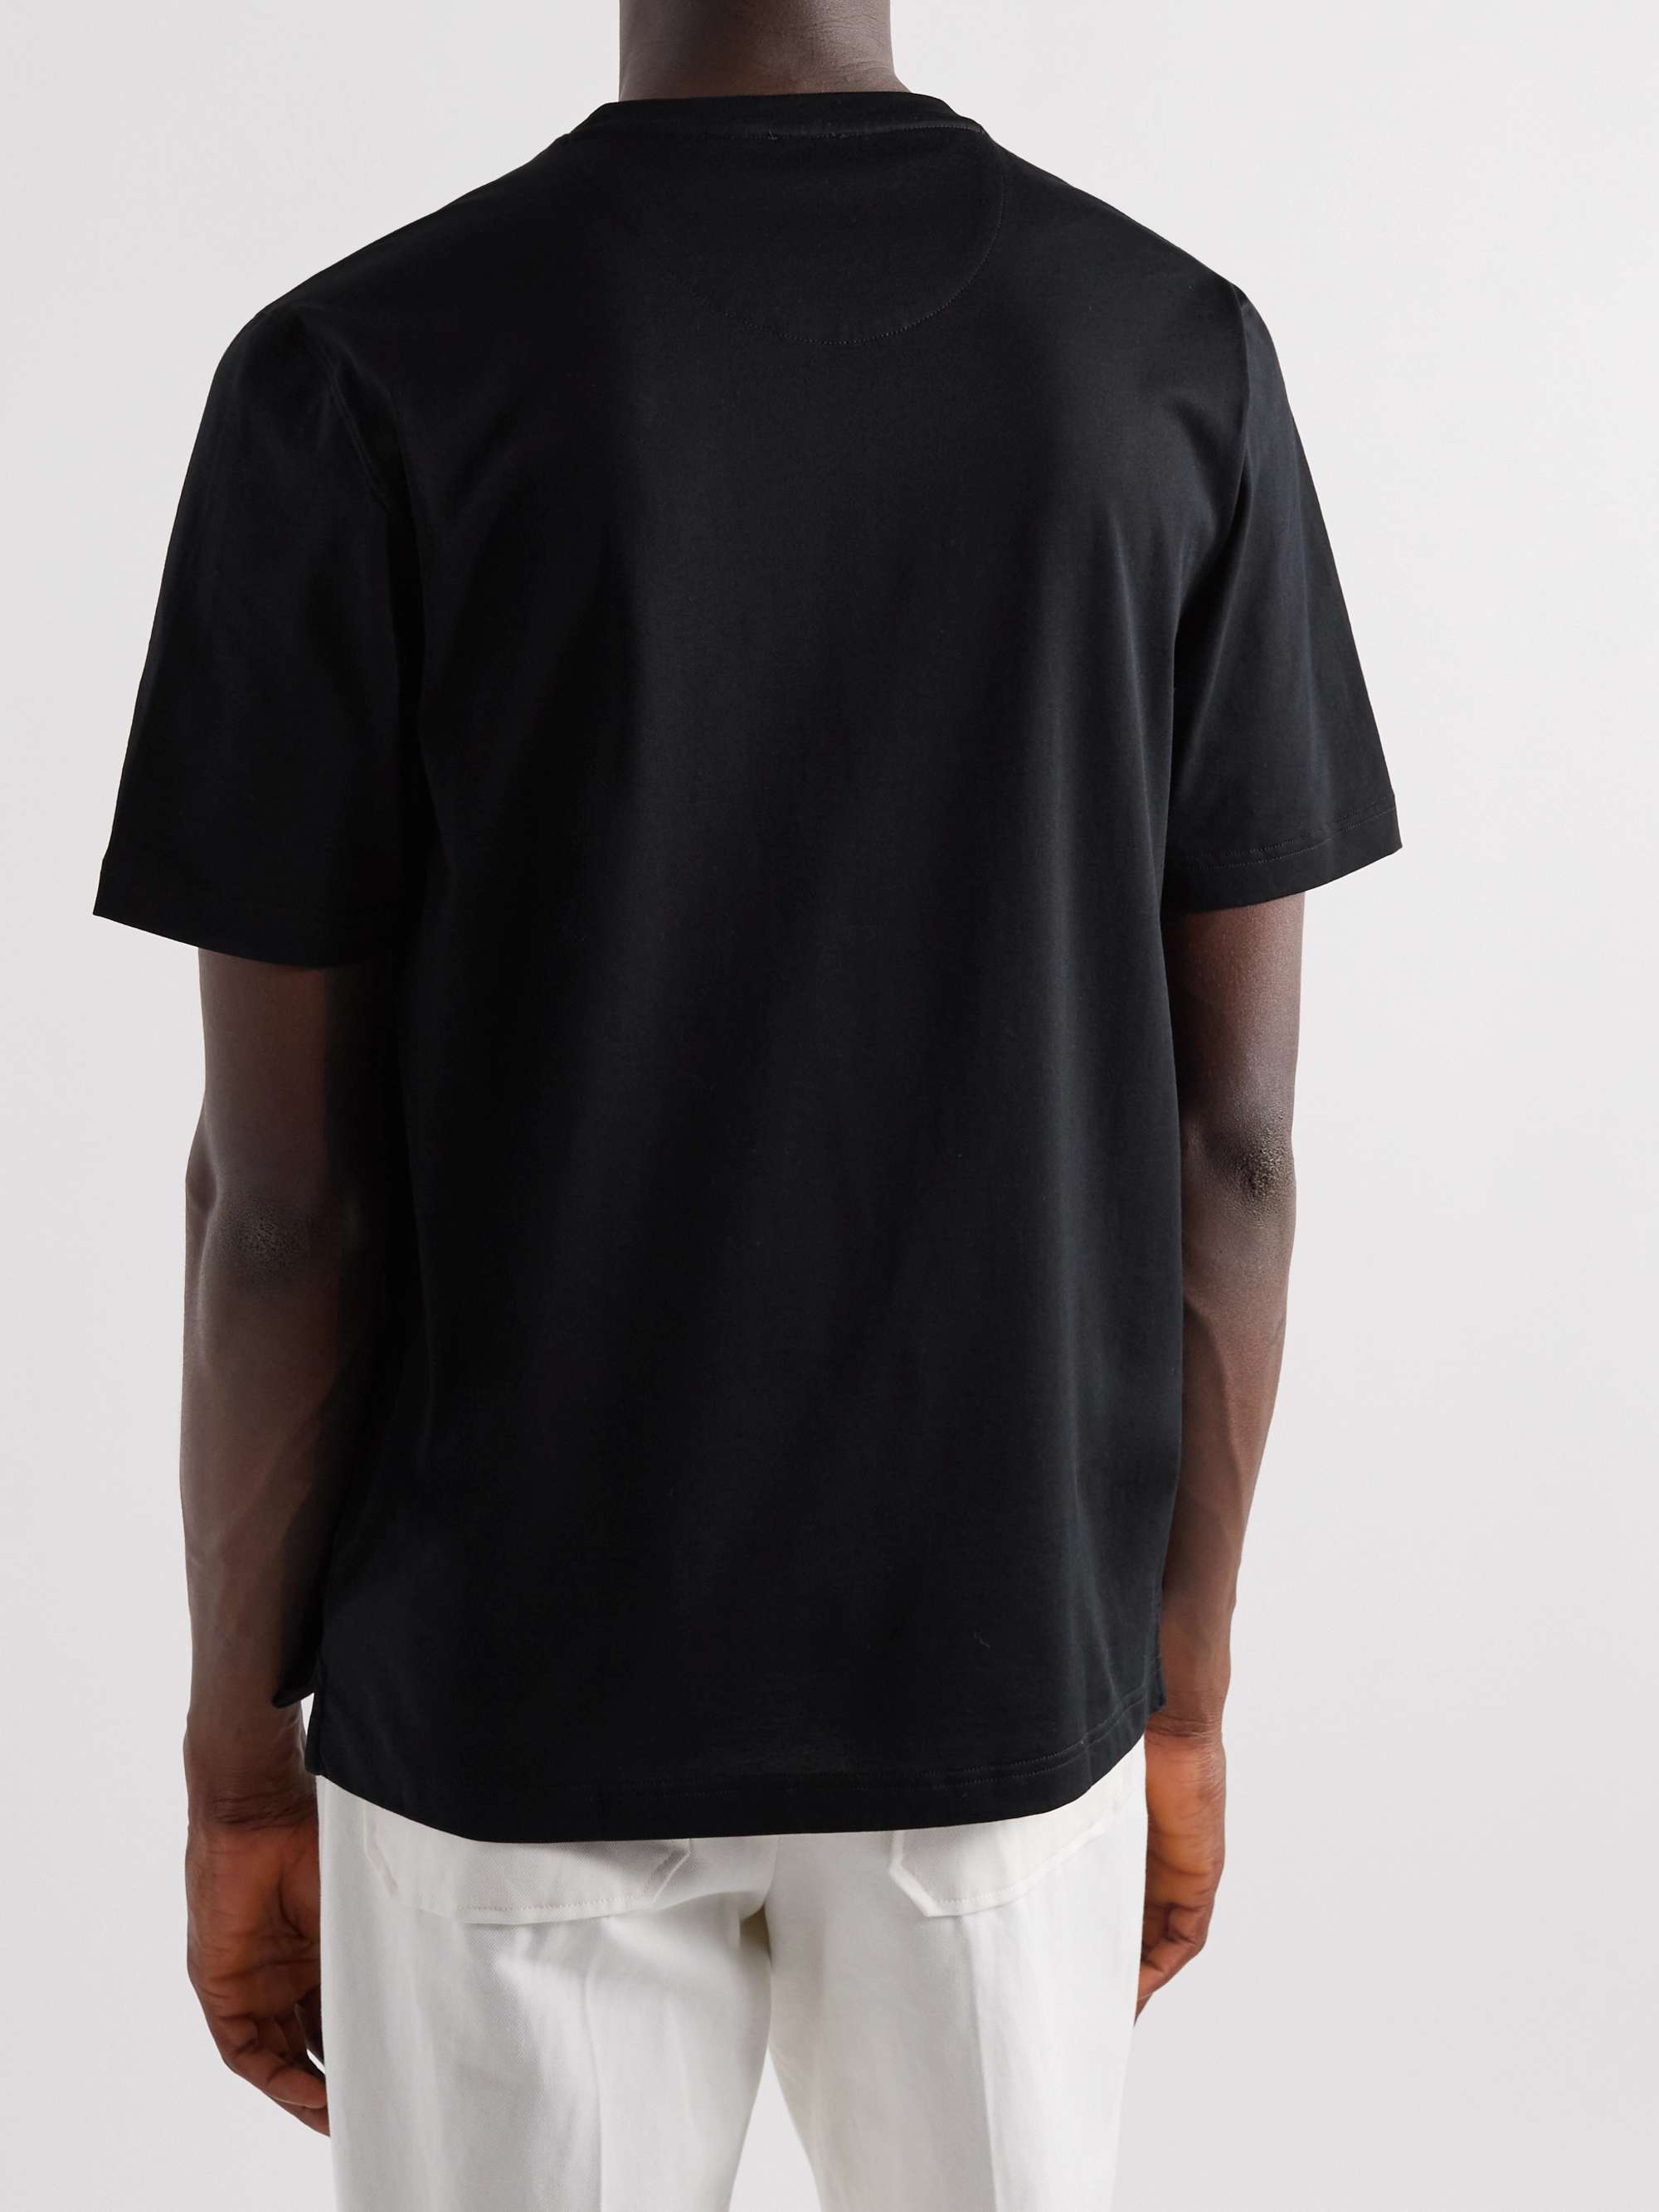 CARUSO Cotton-Jersey T-Shirt